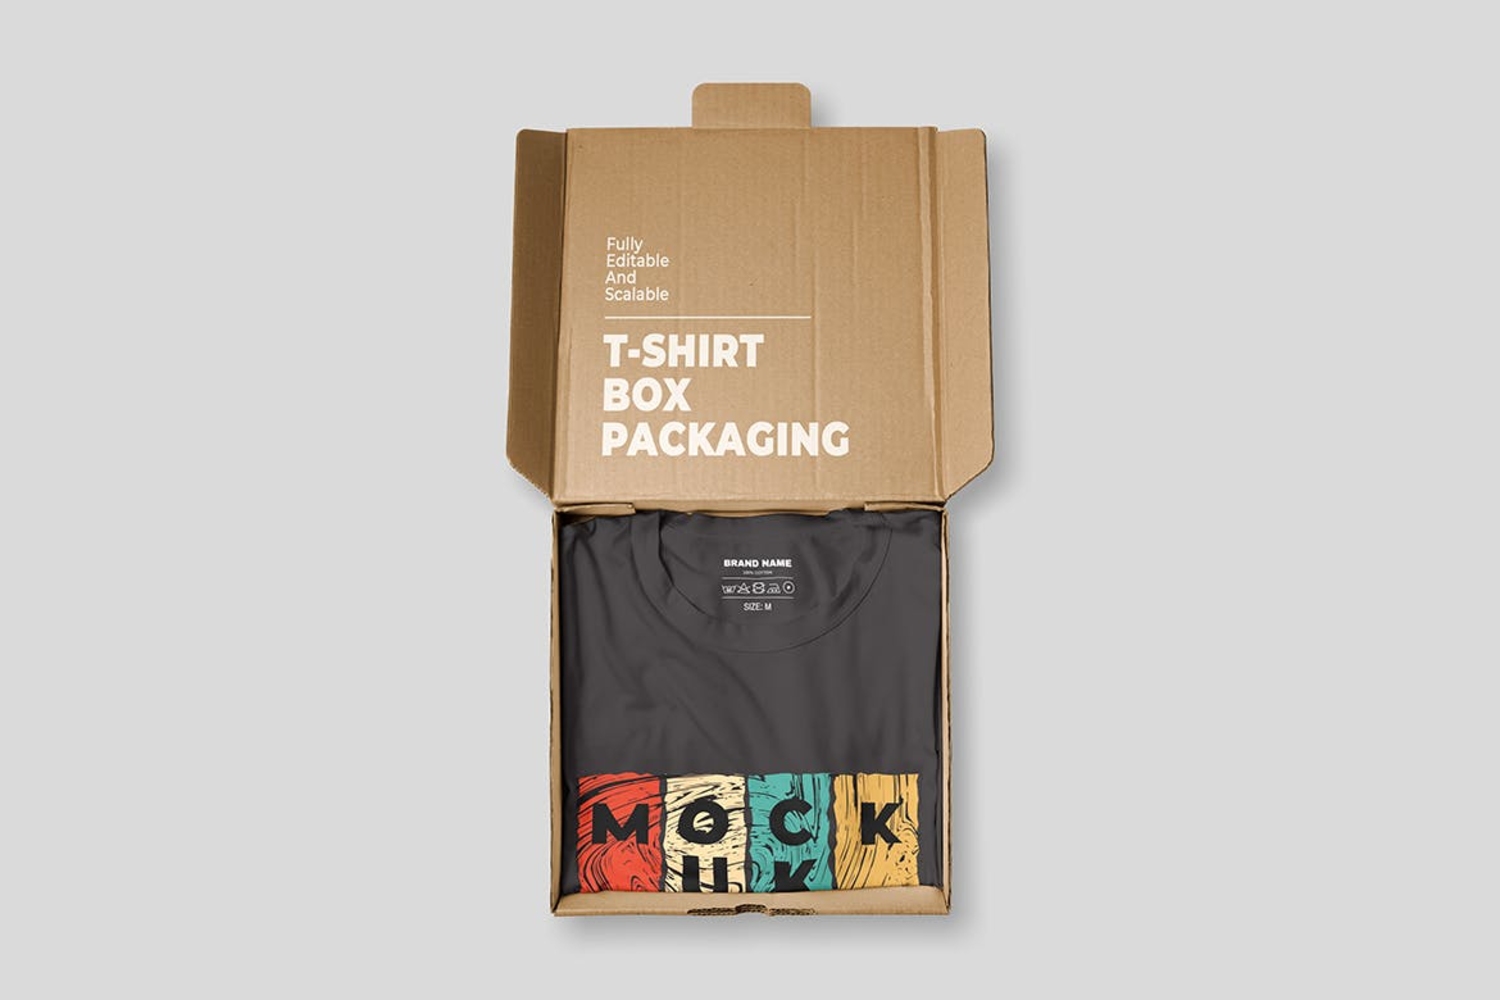 6274 创意个性化折叠T恤盒包装设计样机-Folding T-shirt box packaging design mockup